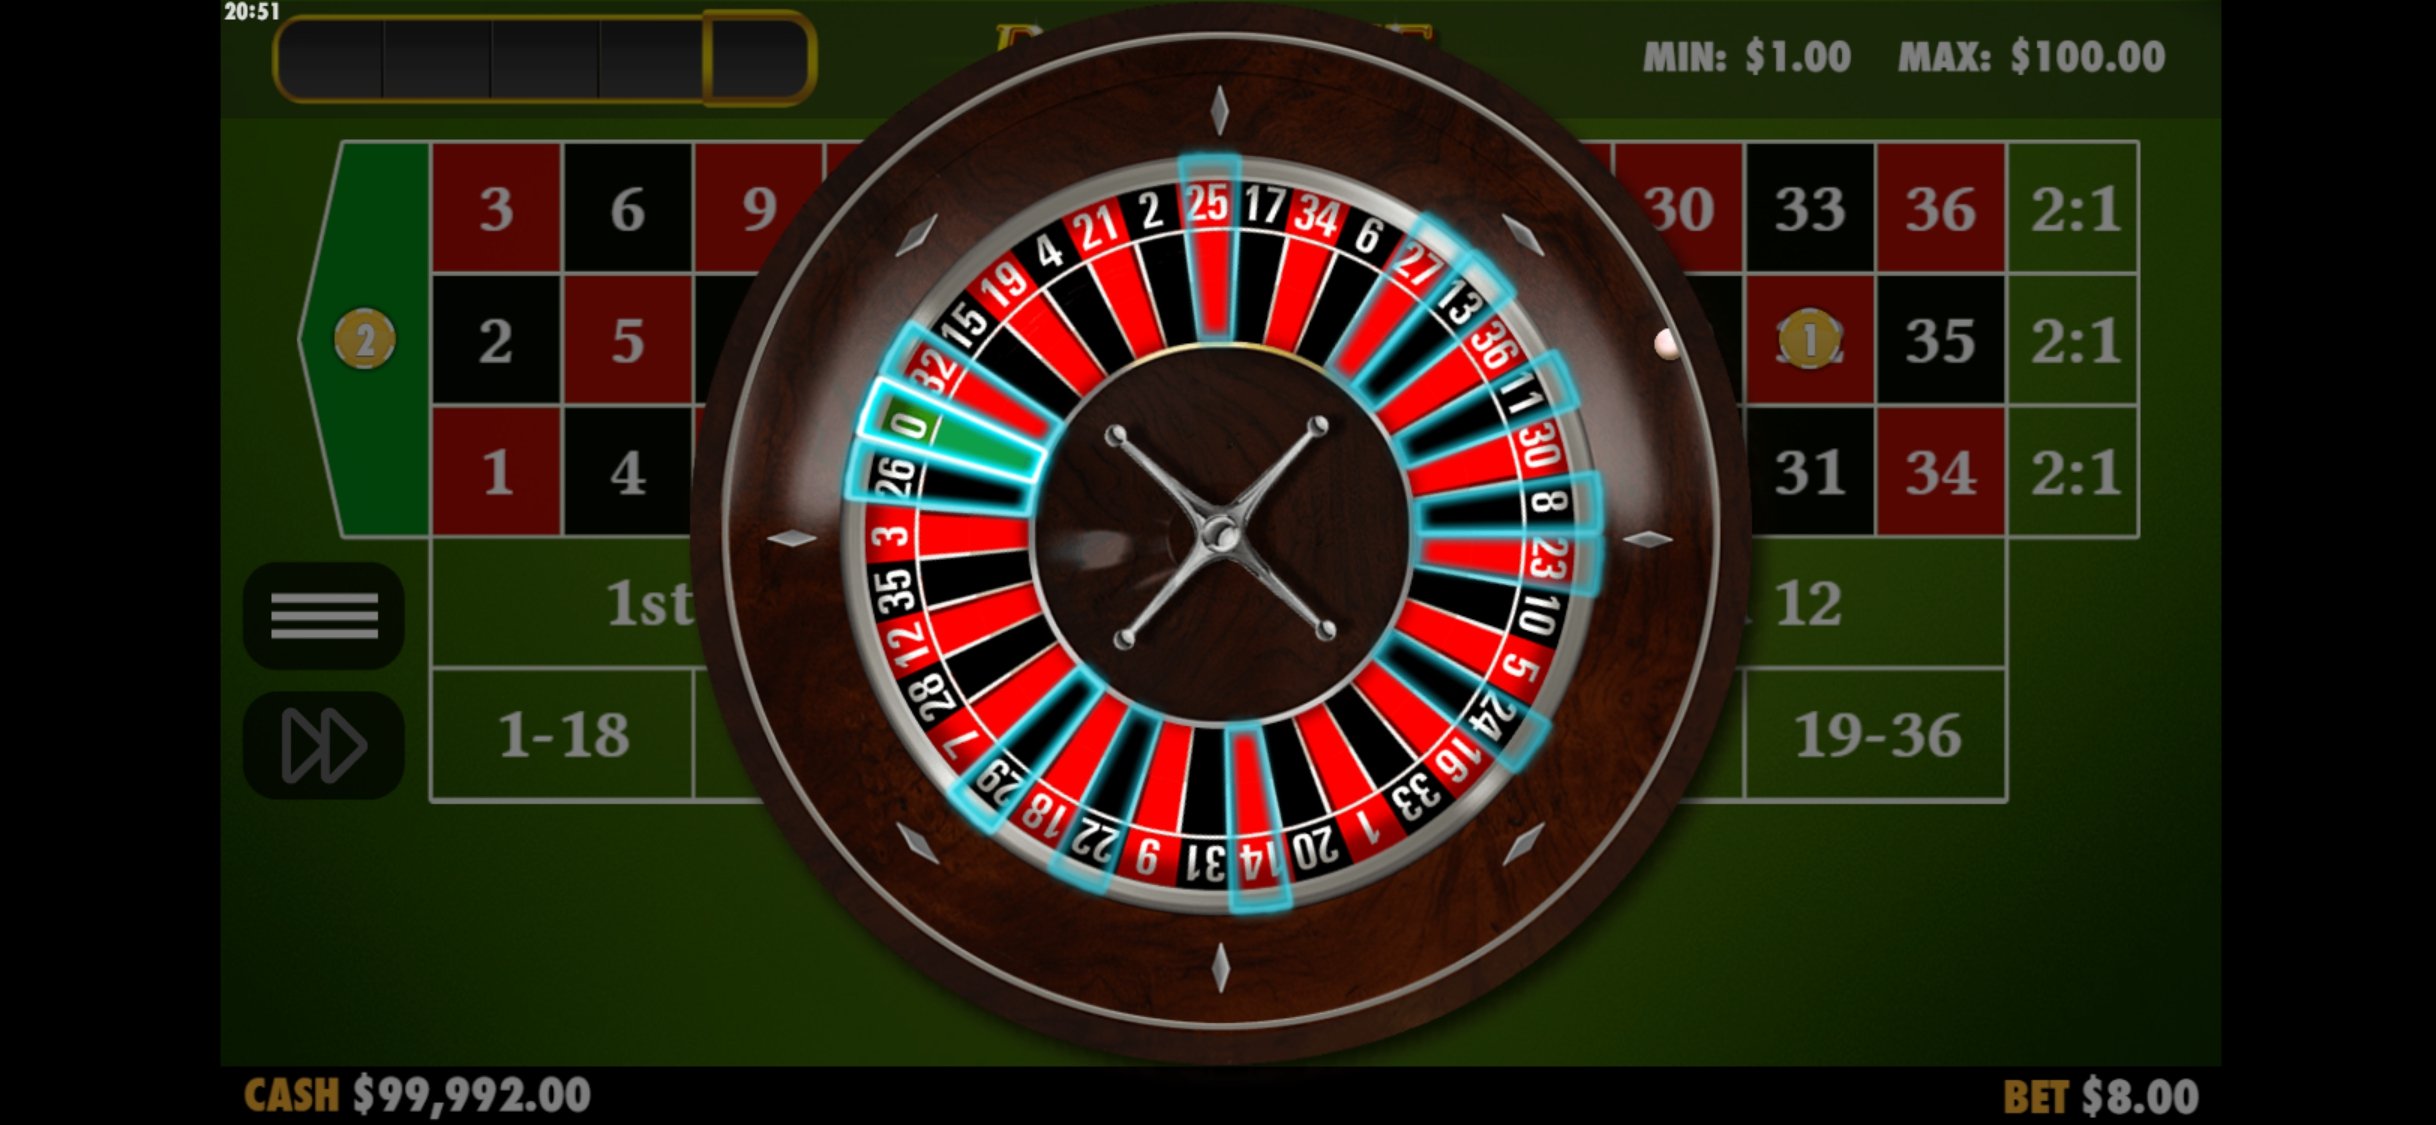 1Xbet Casino Mobile Casino Games Review